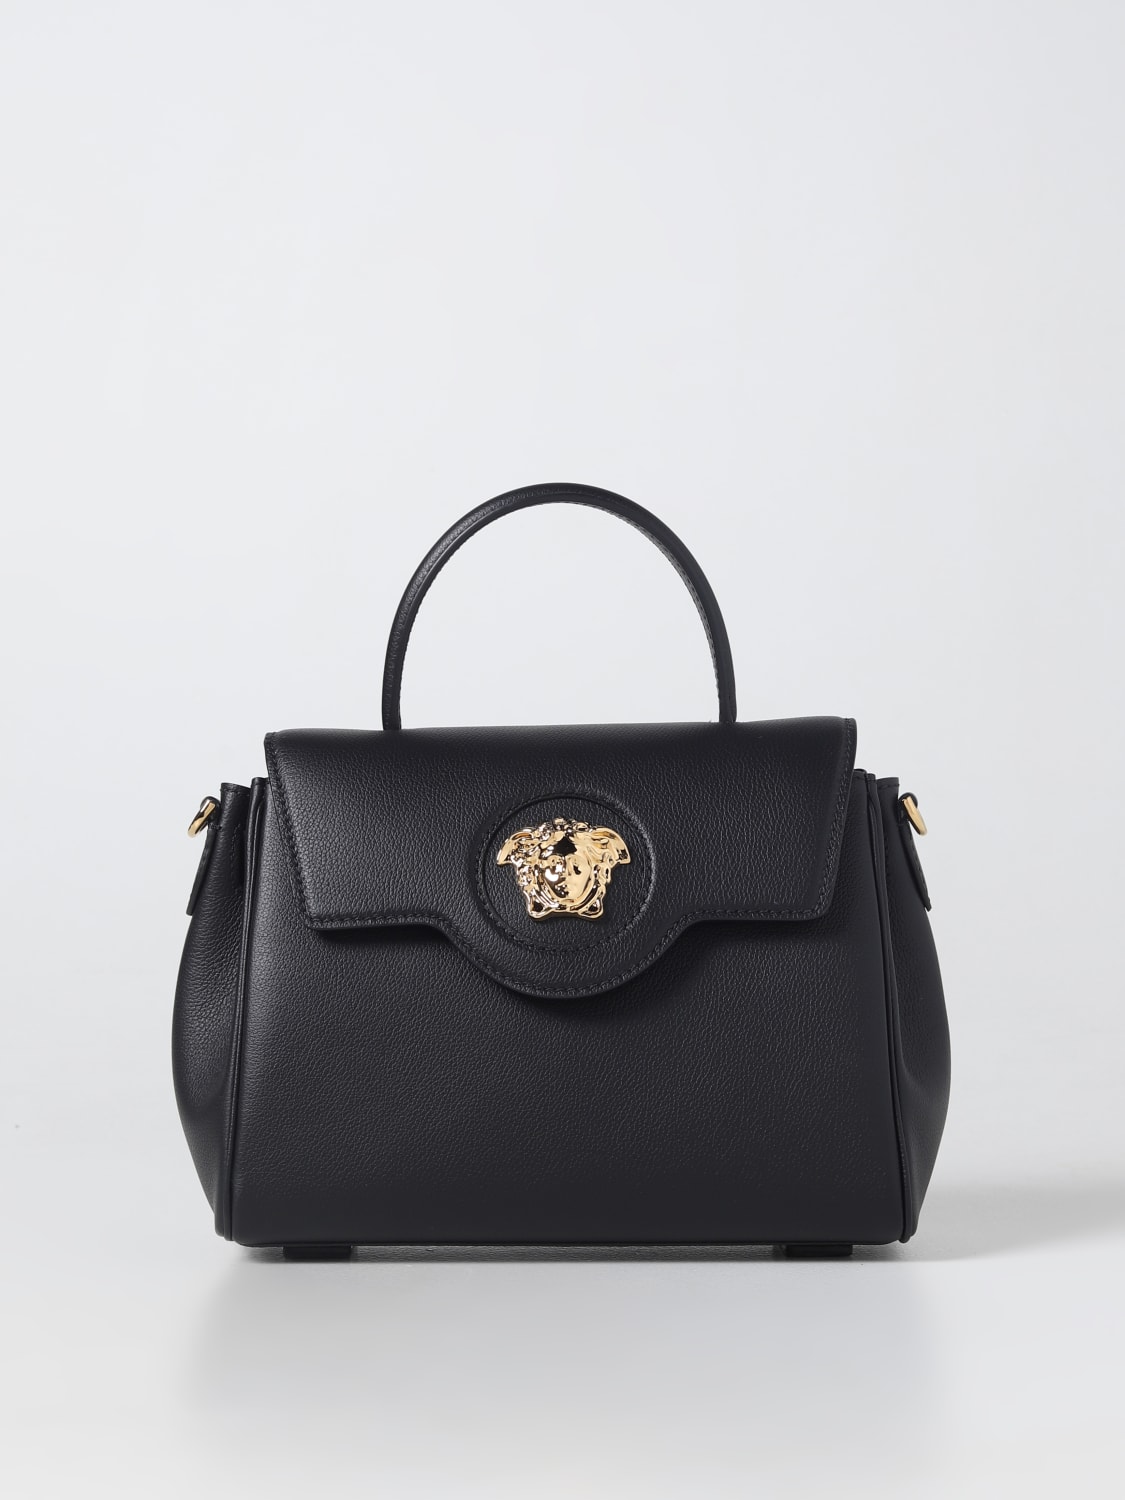 VERSACE: La Medusa bag in textured leather - Black  Versace handbag  DBFI039DVIT2T online at